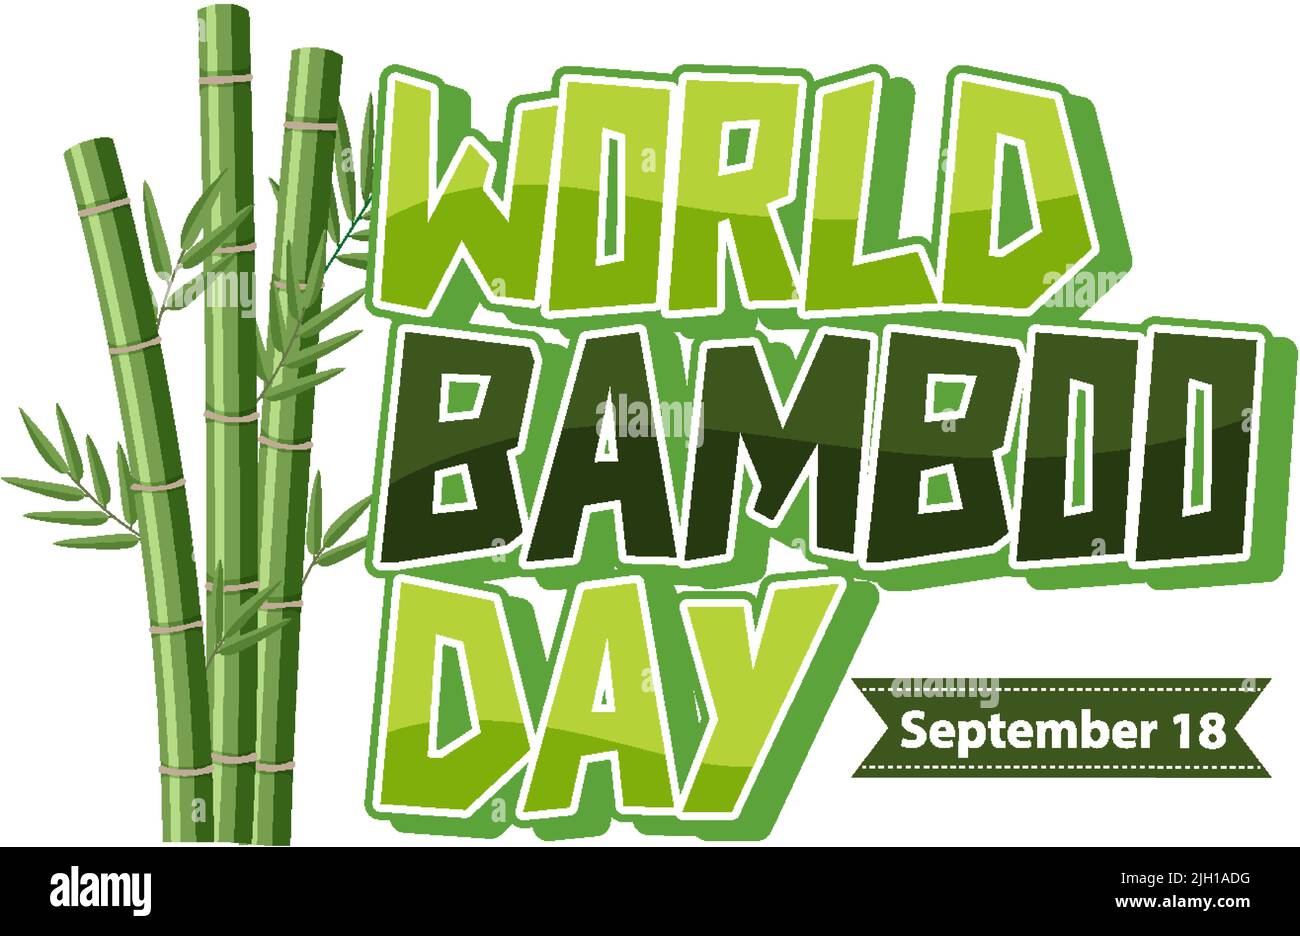 World bamboo day logo banner illustration Stock Vector Image & Art Alamy